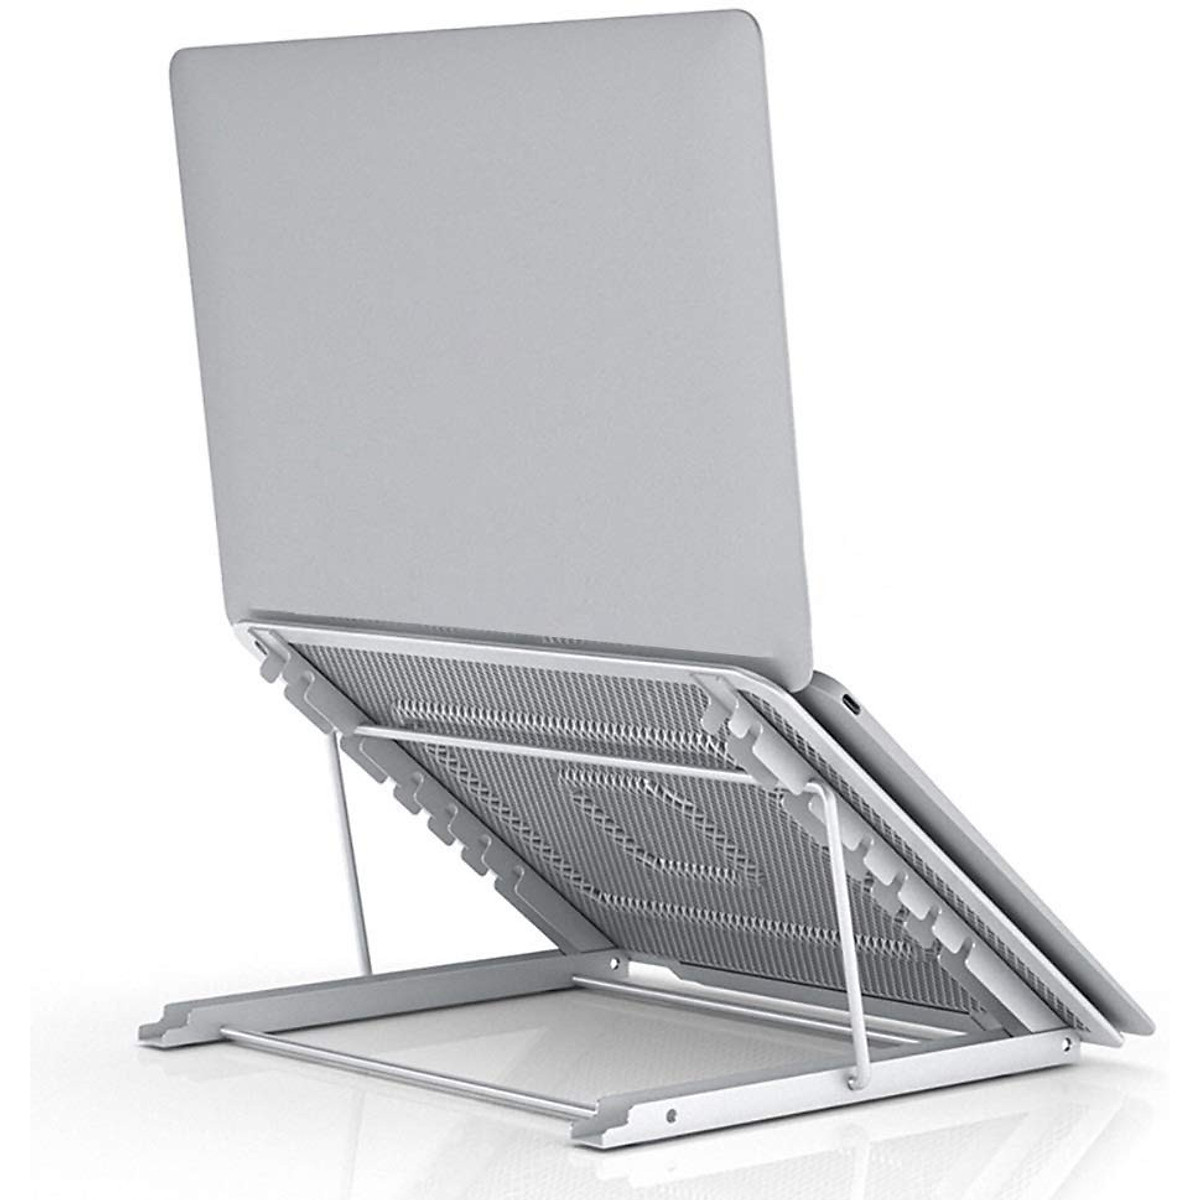 Gía Đỡ Tản Nhiệt  Hyperstand Folding Alumium For Macbook/Laptop/Ipad – HTU6